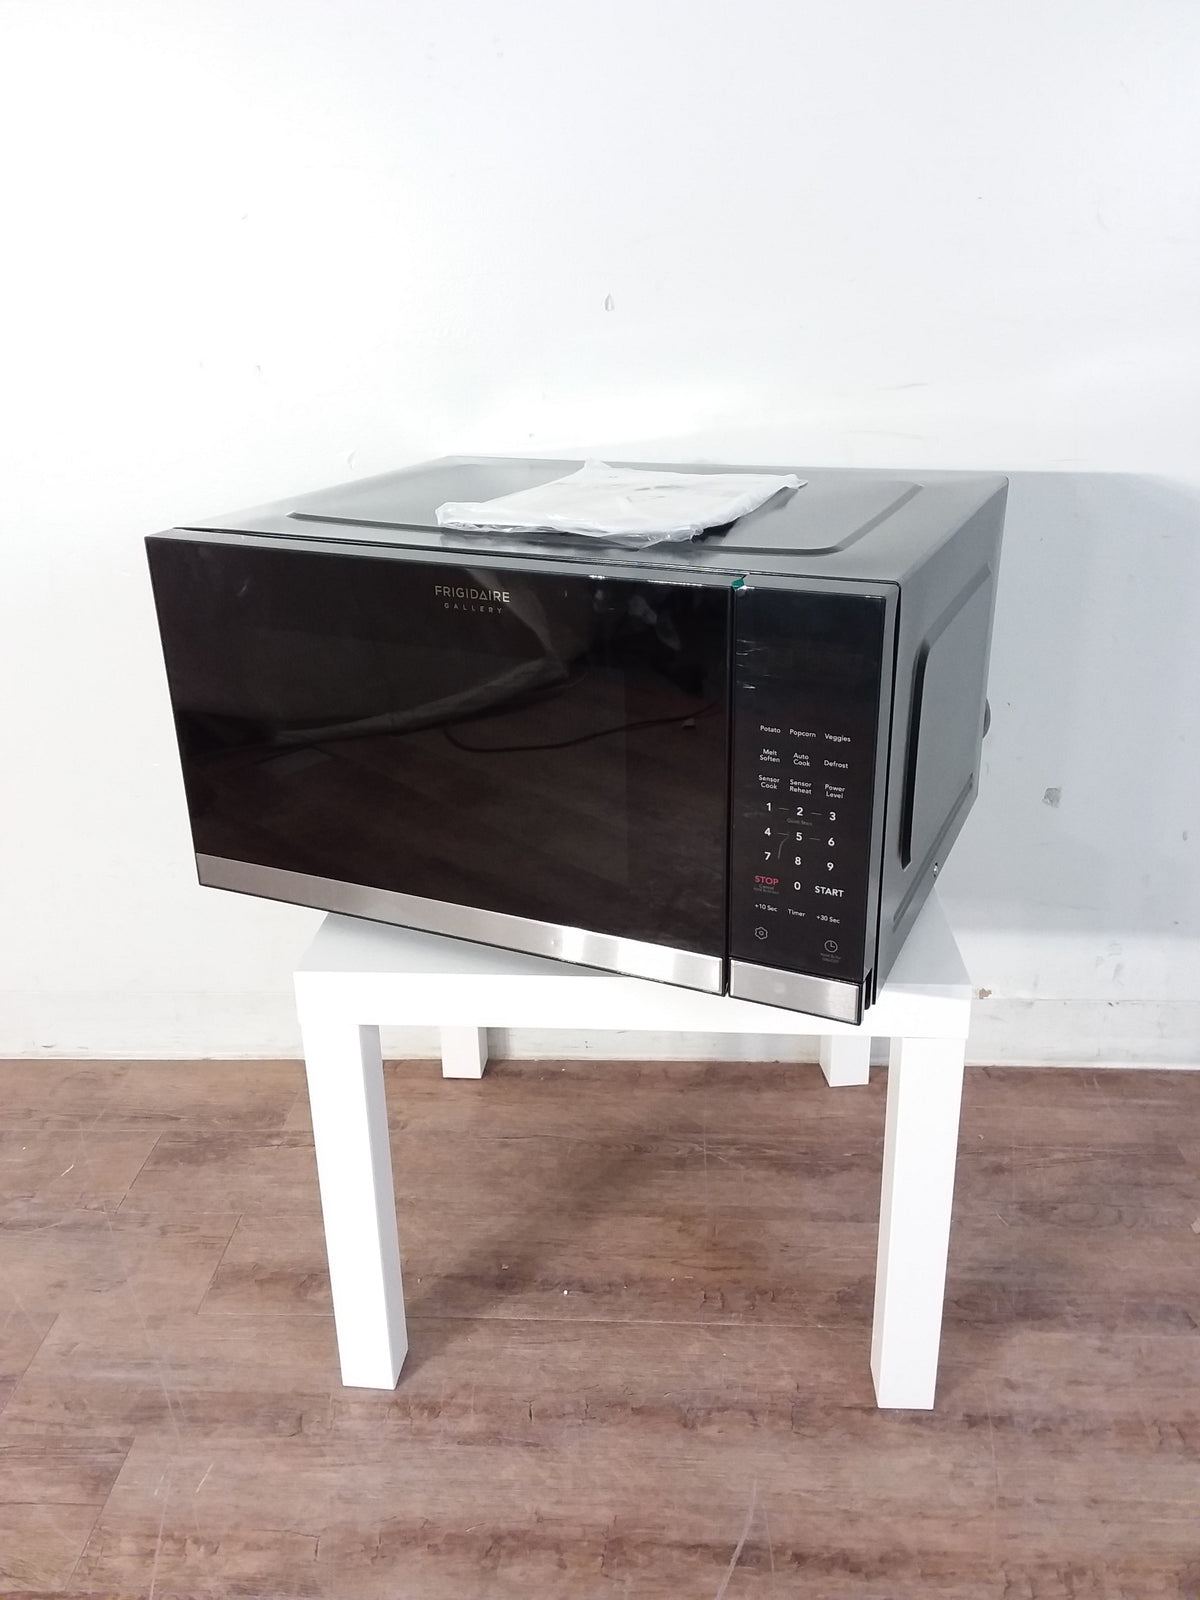 Frigidaire Gallery Microwave